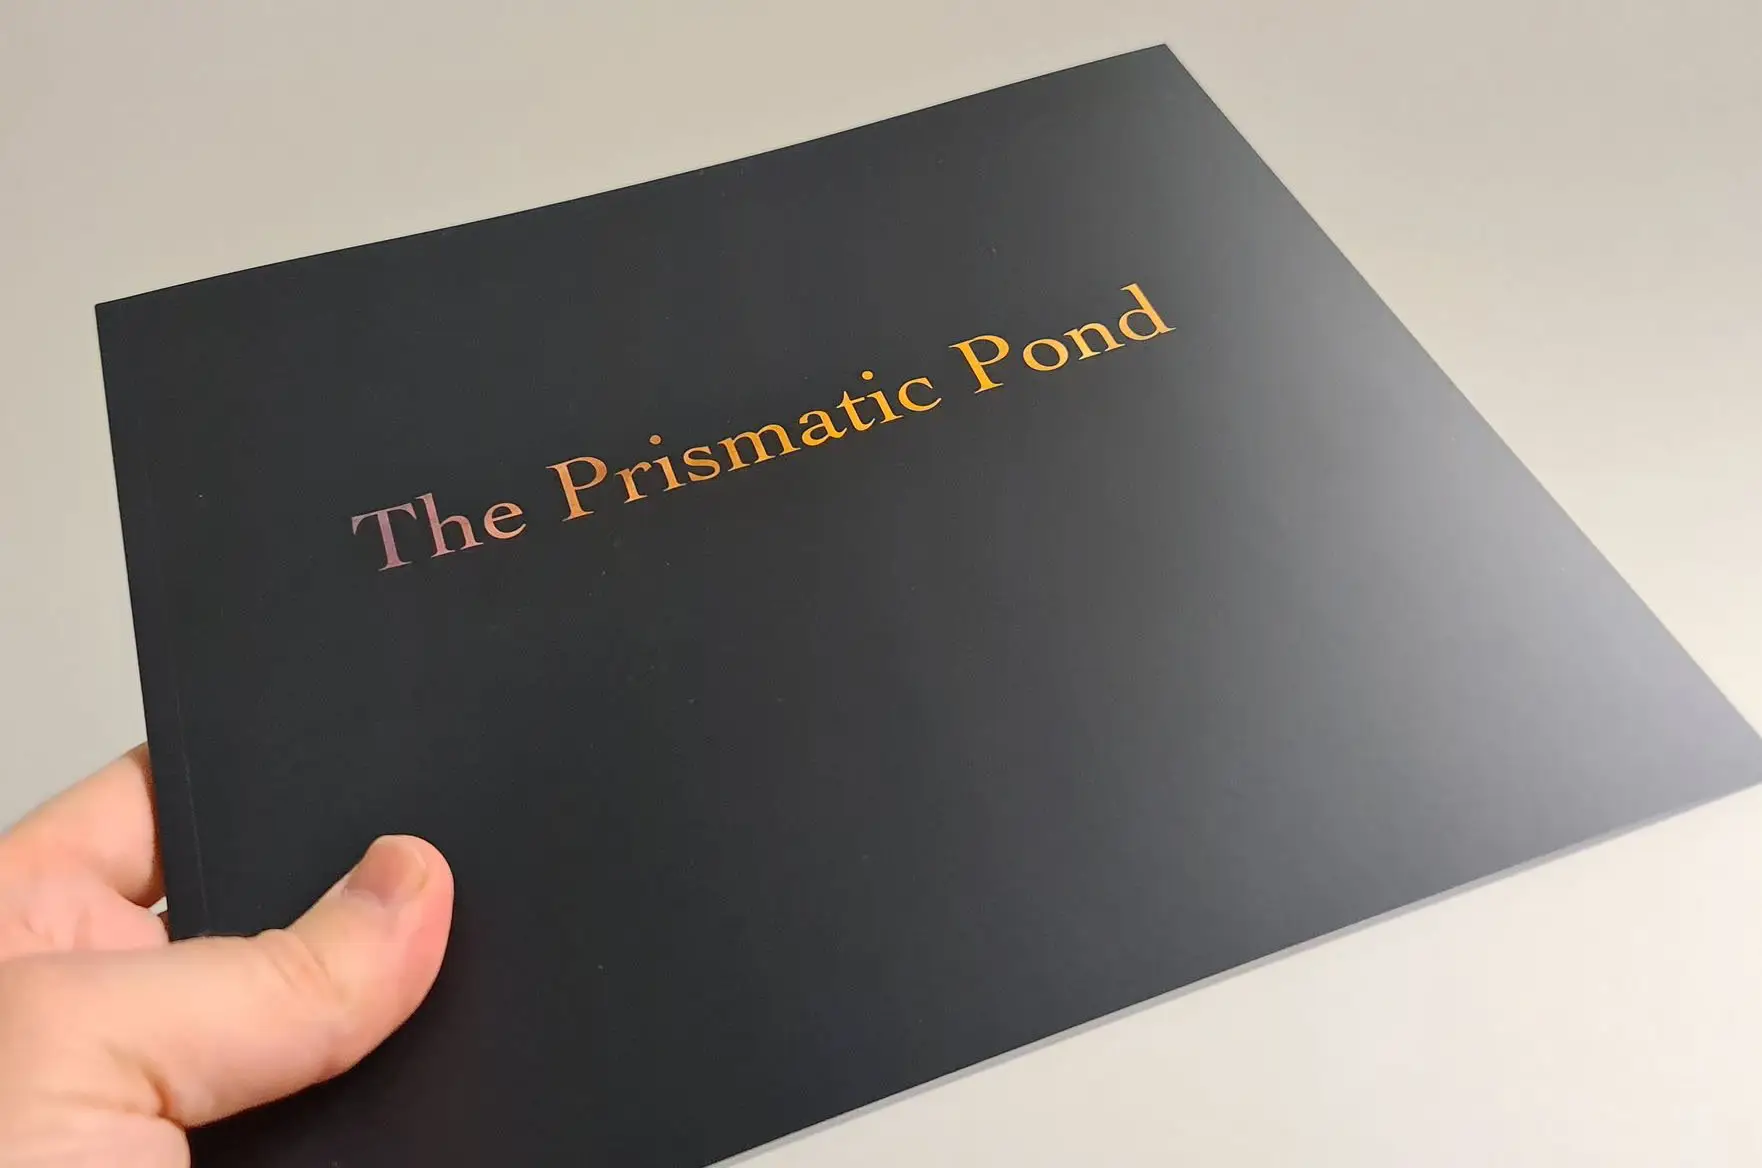 The Prismatic Pond